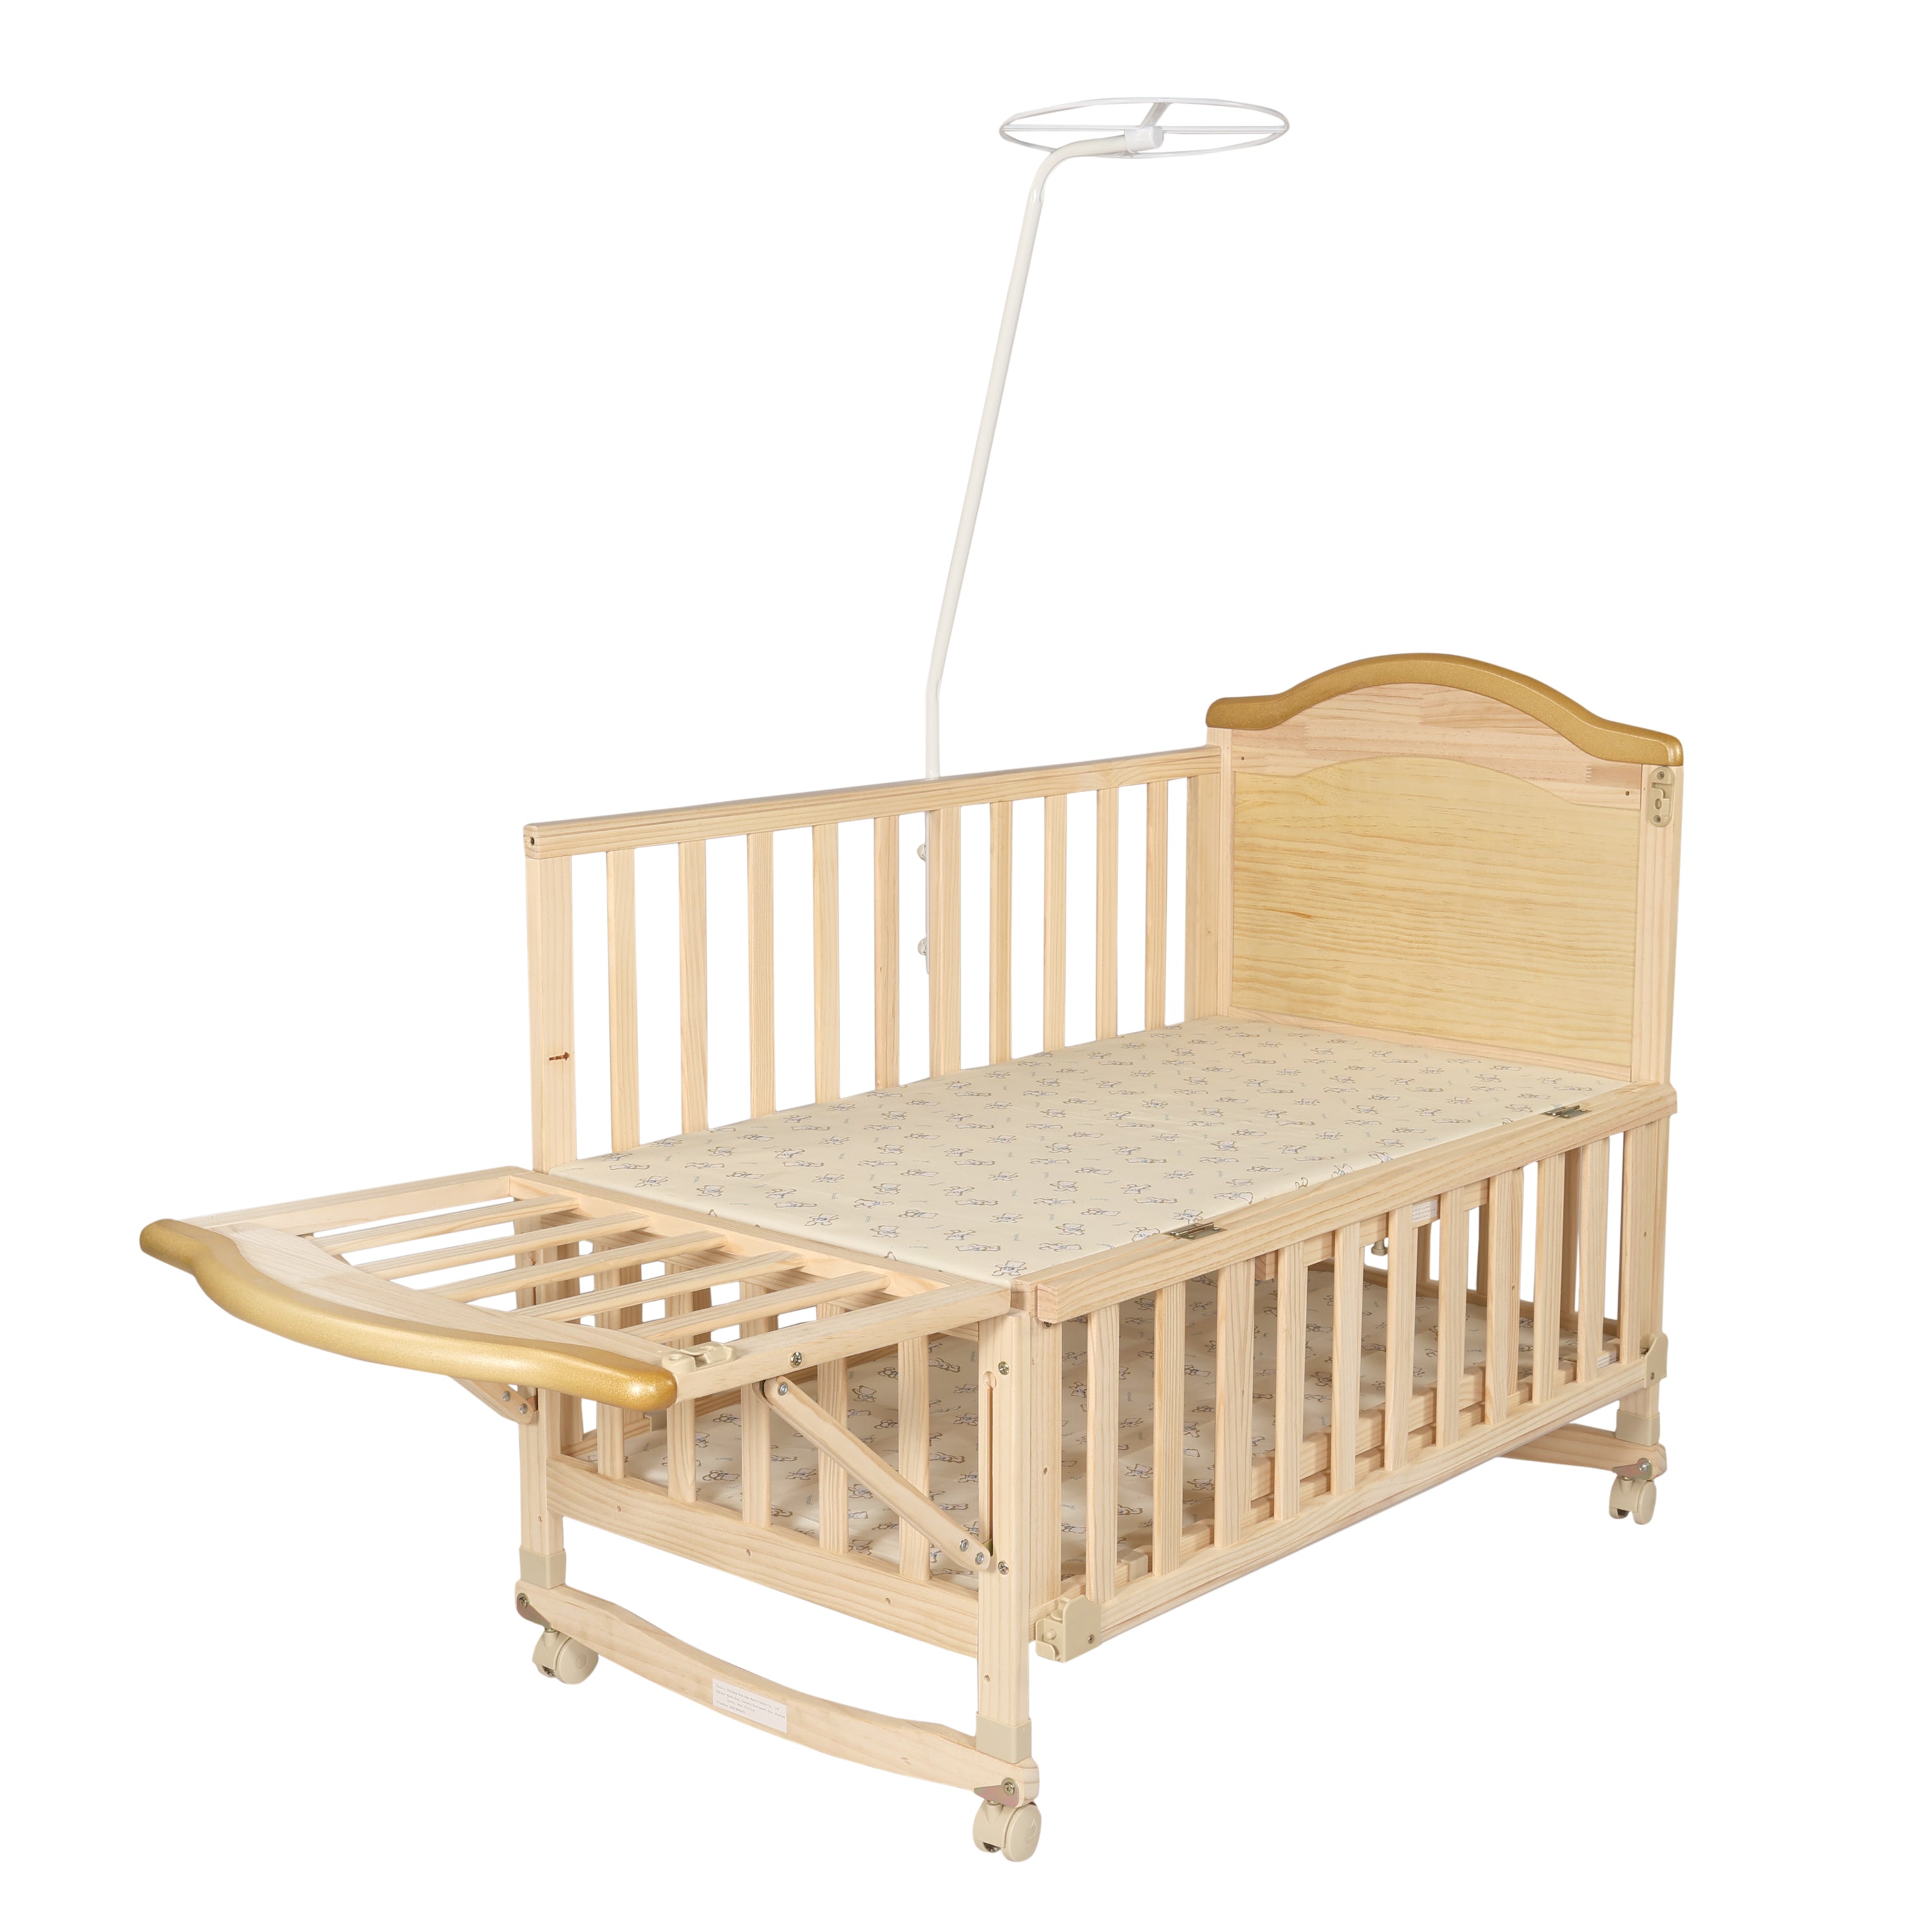 Leo Pine Wood Crib/Cot for Baby's Joy - Natural